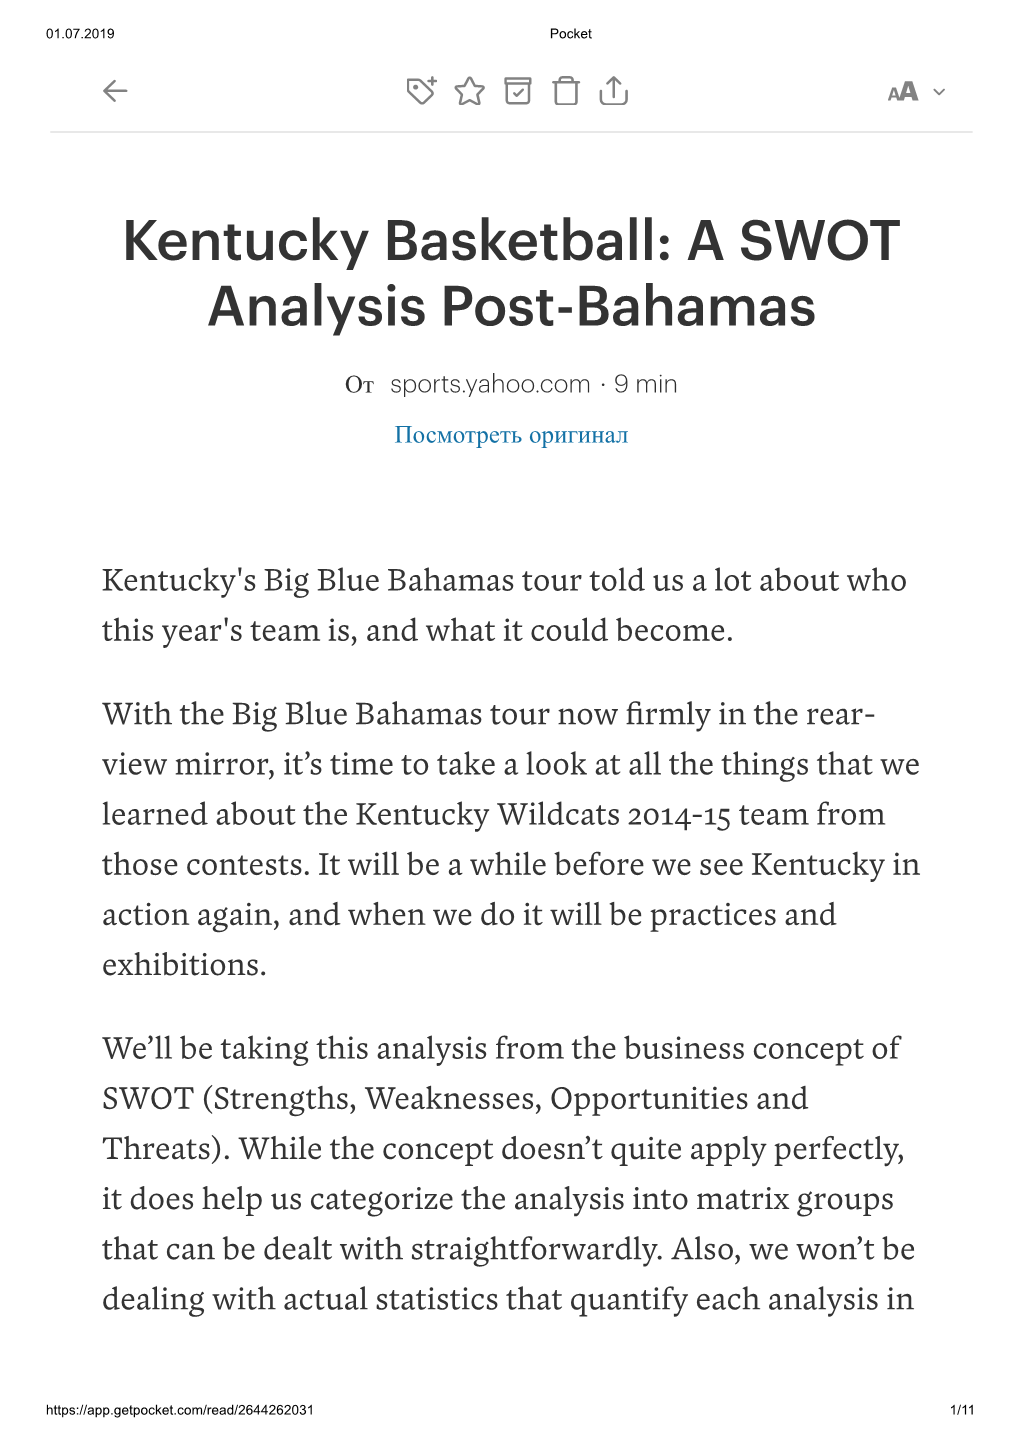 Kentucky Basketball: a SWOT Analysis Post-Bahamas